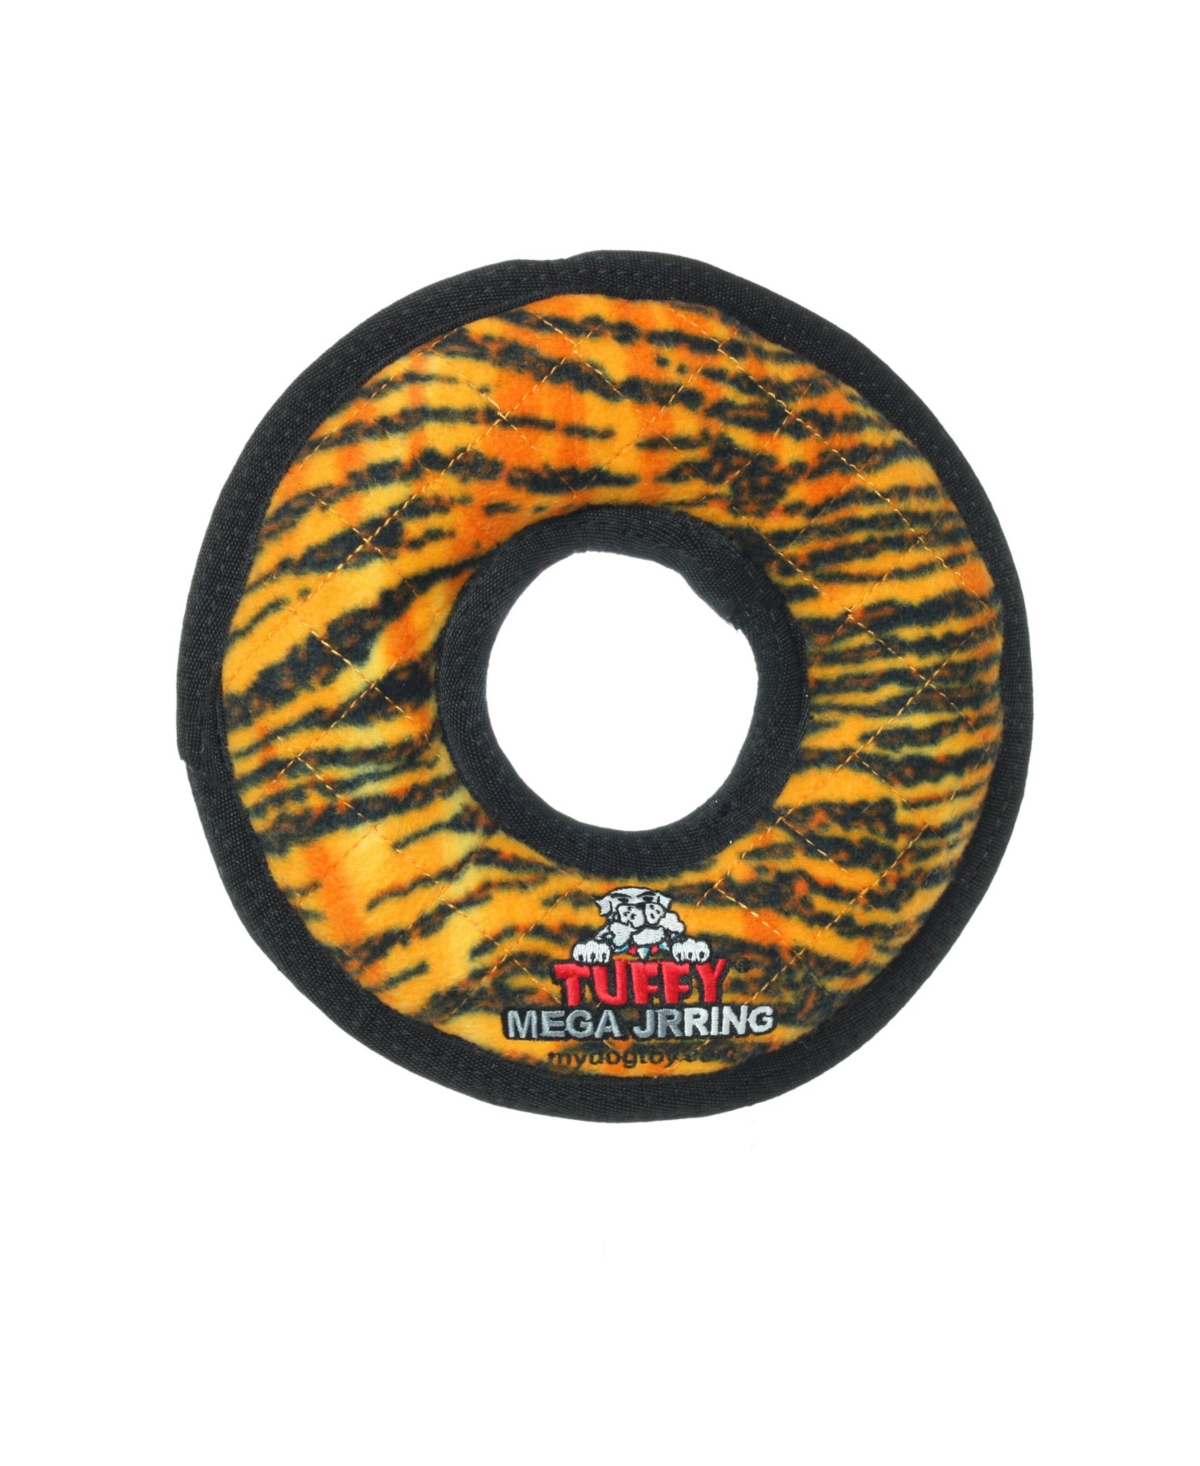 Mega Jr Ring Tiger, Dog Toy - Medium Orange